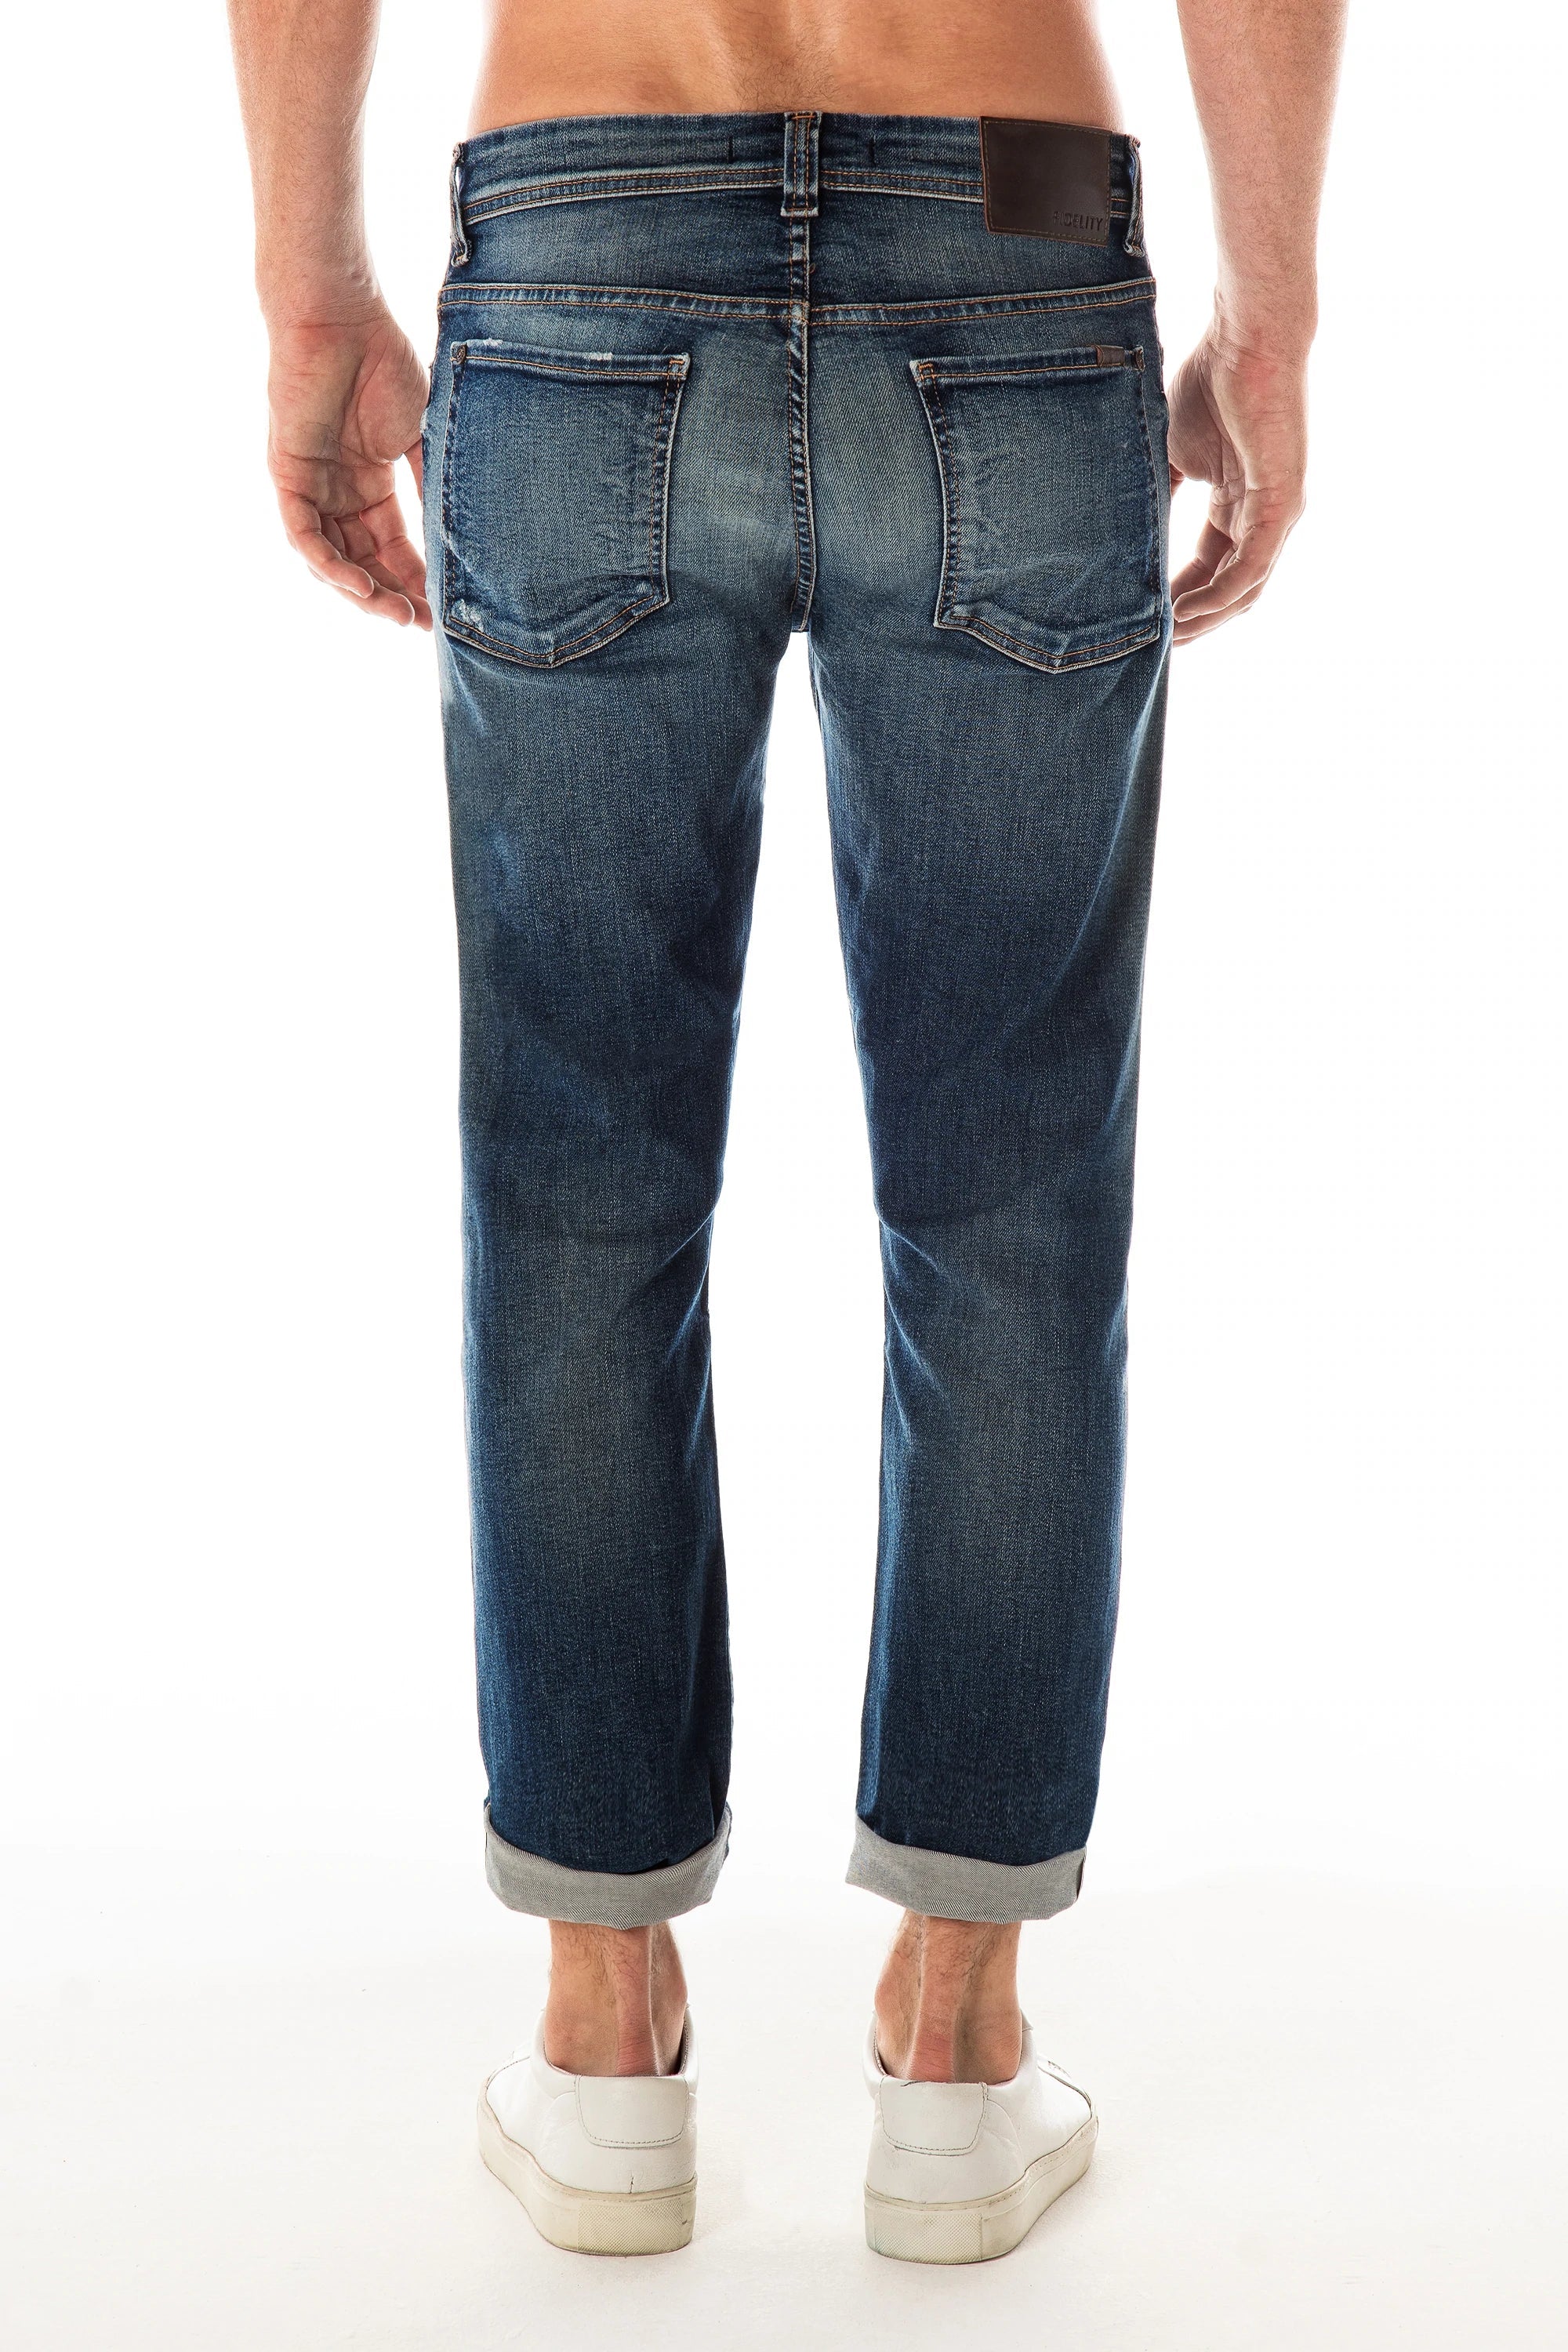 Fidelity Denim Torino Patchouli Selvedge Slim Fit Jeans-Men&#39;s Denim-Yaletown-Vancouver-Surrey-Canada